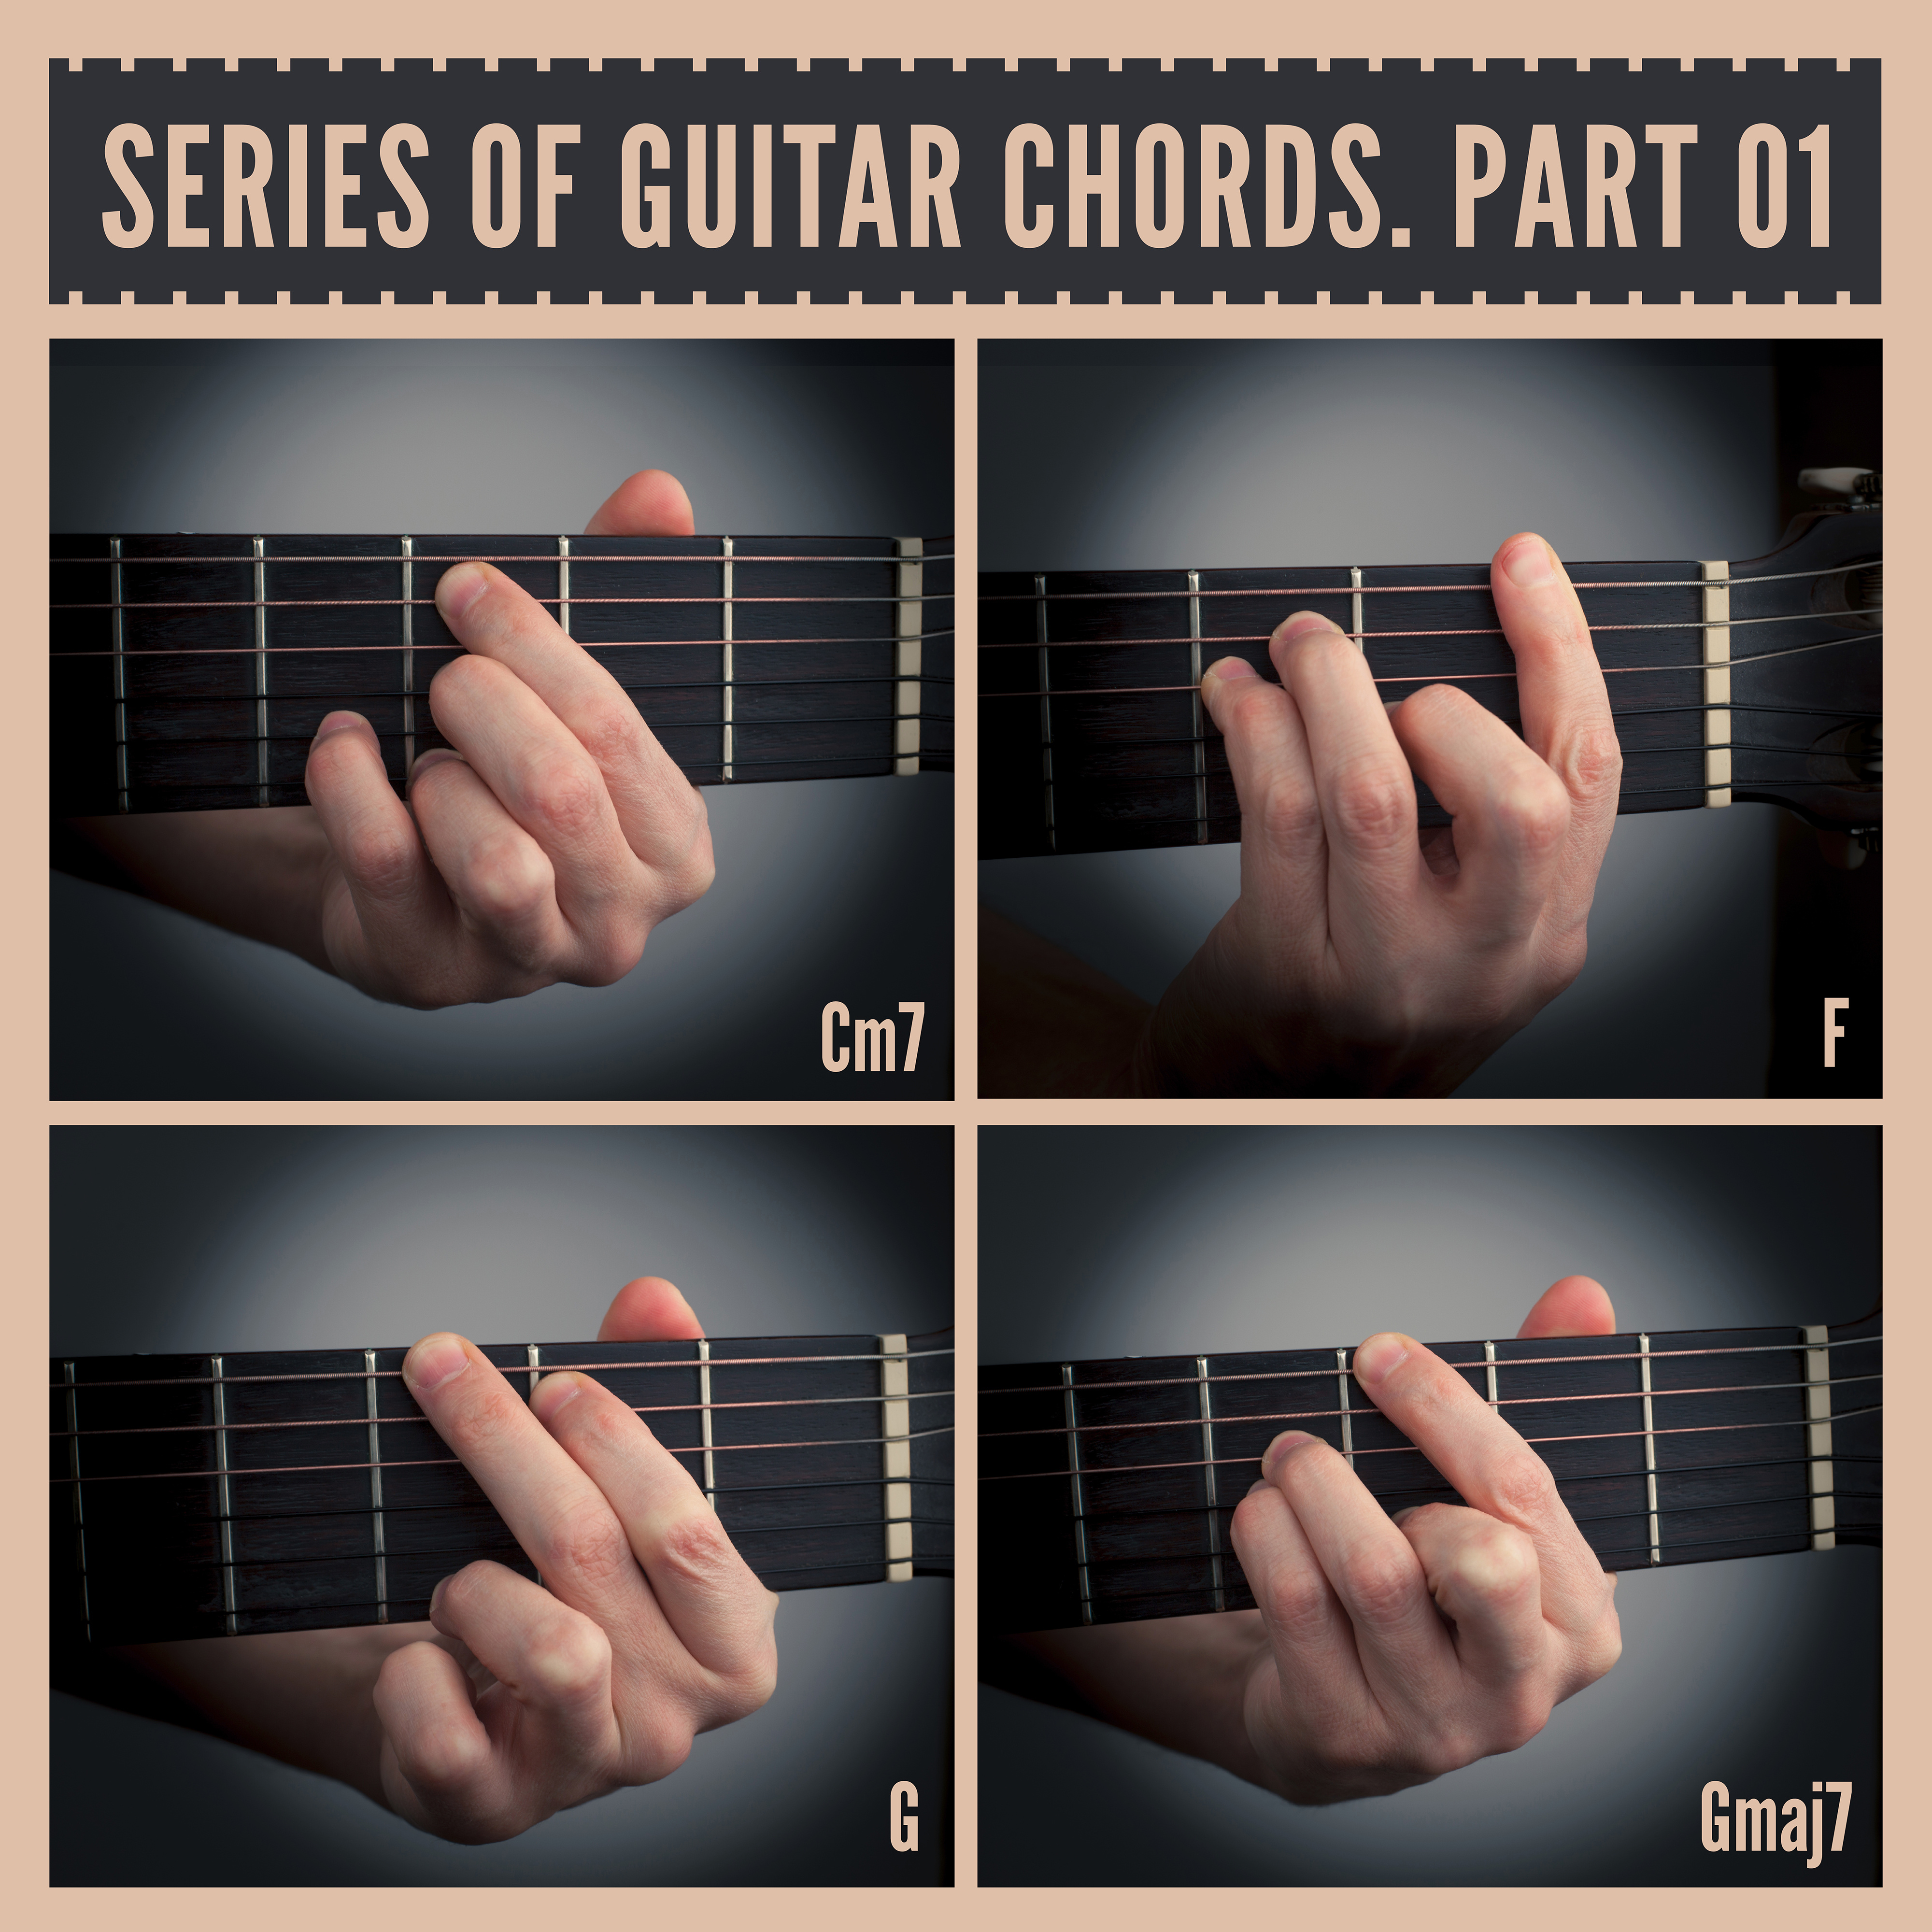 beginners chords on guitar